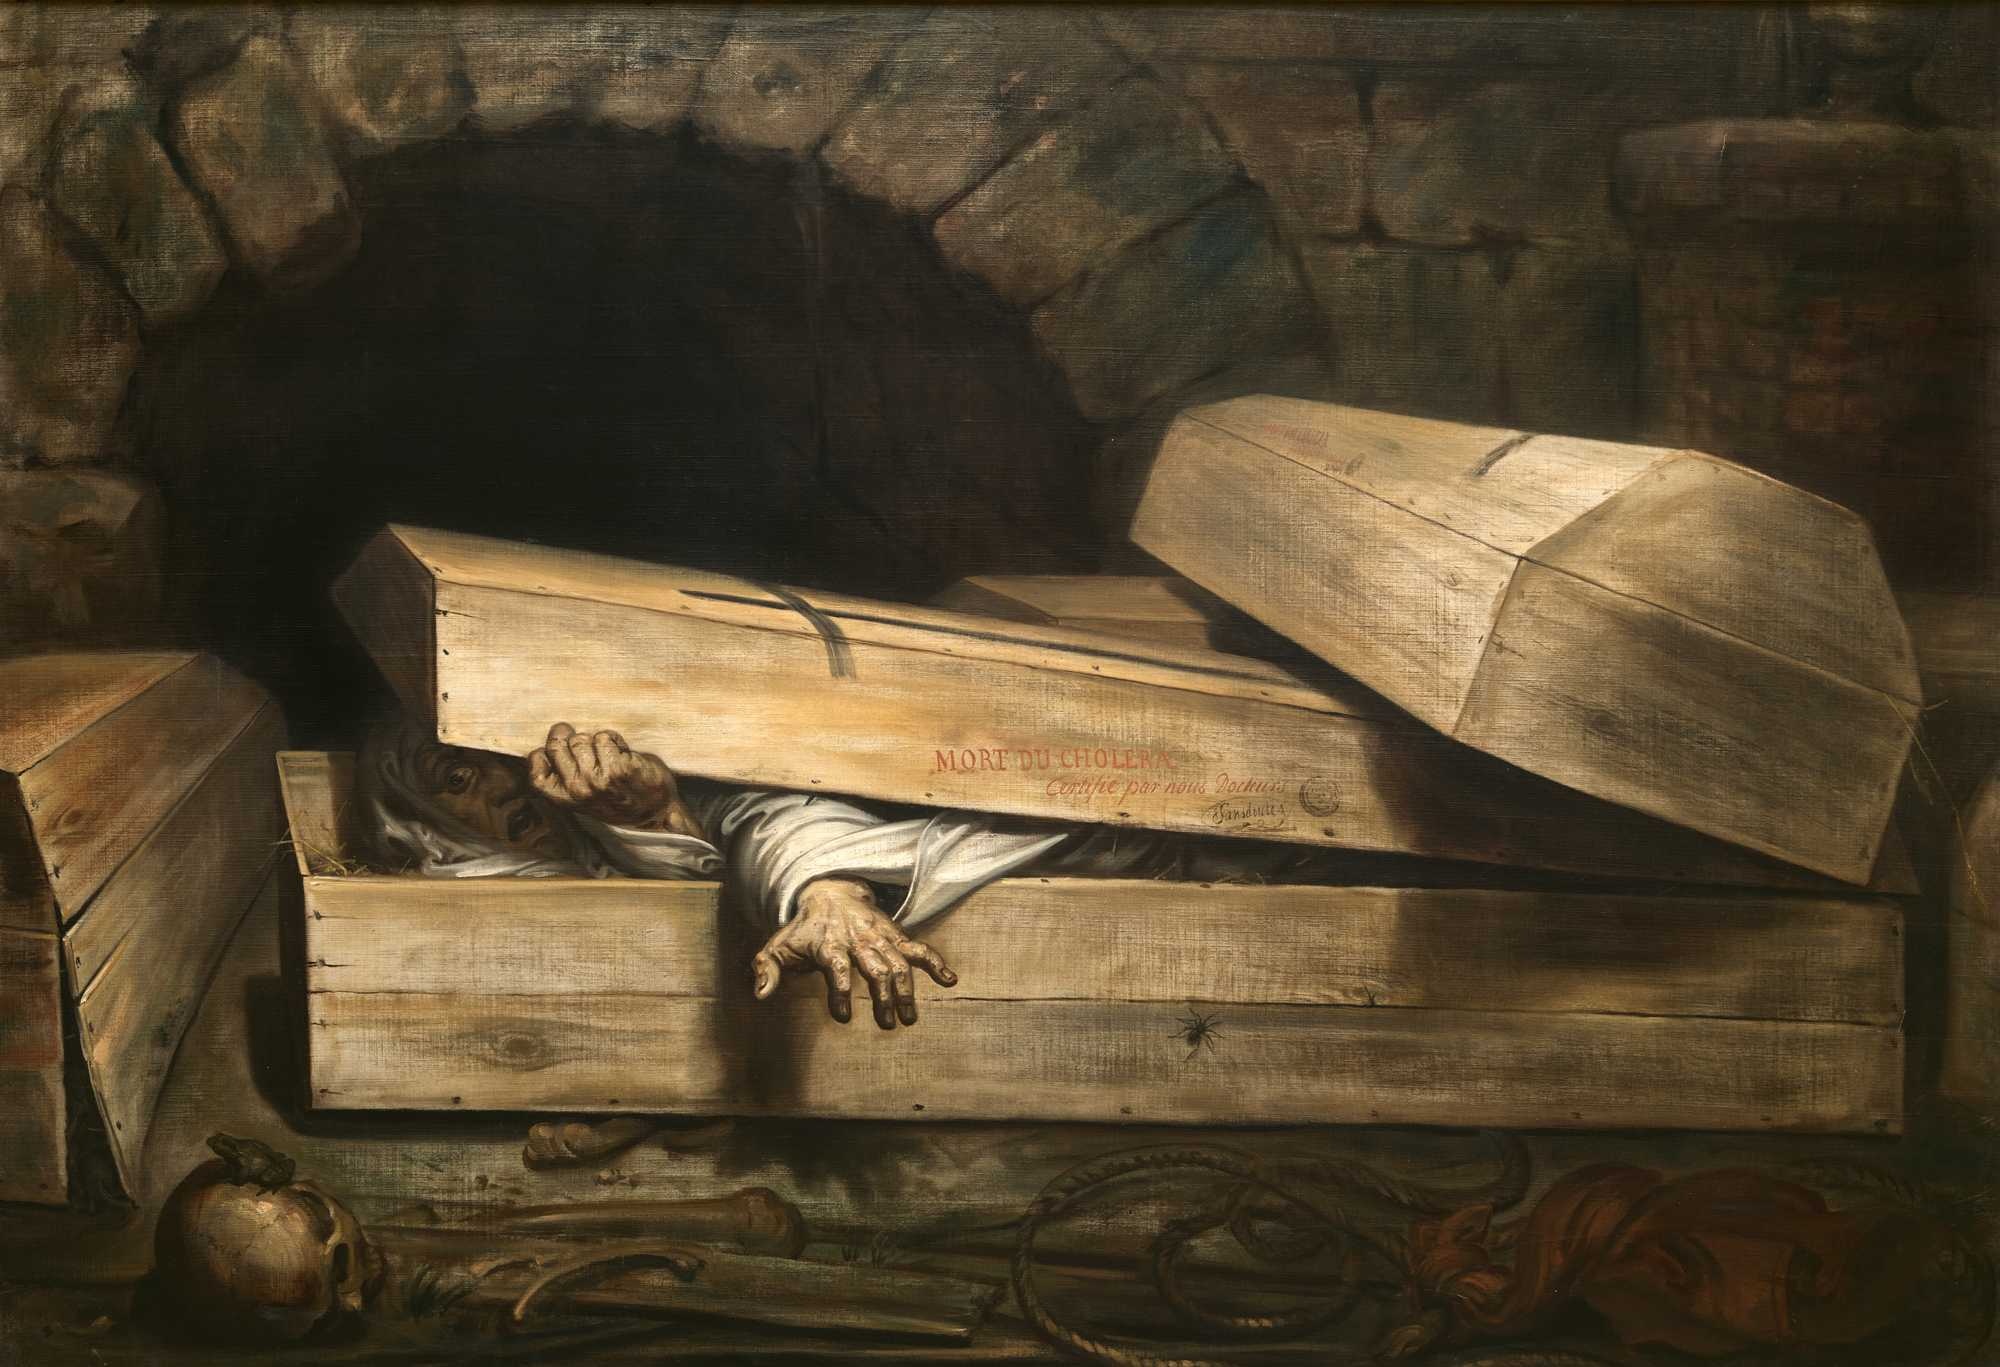 Antoine Wiertz, "The Premature Burial" 1854,